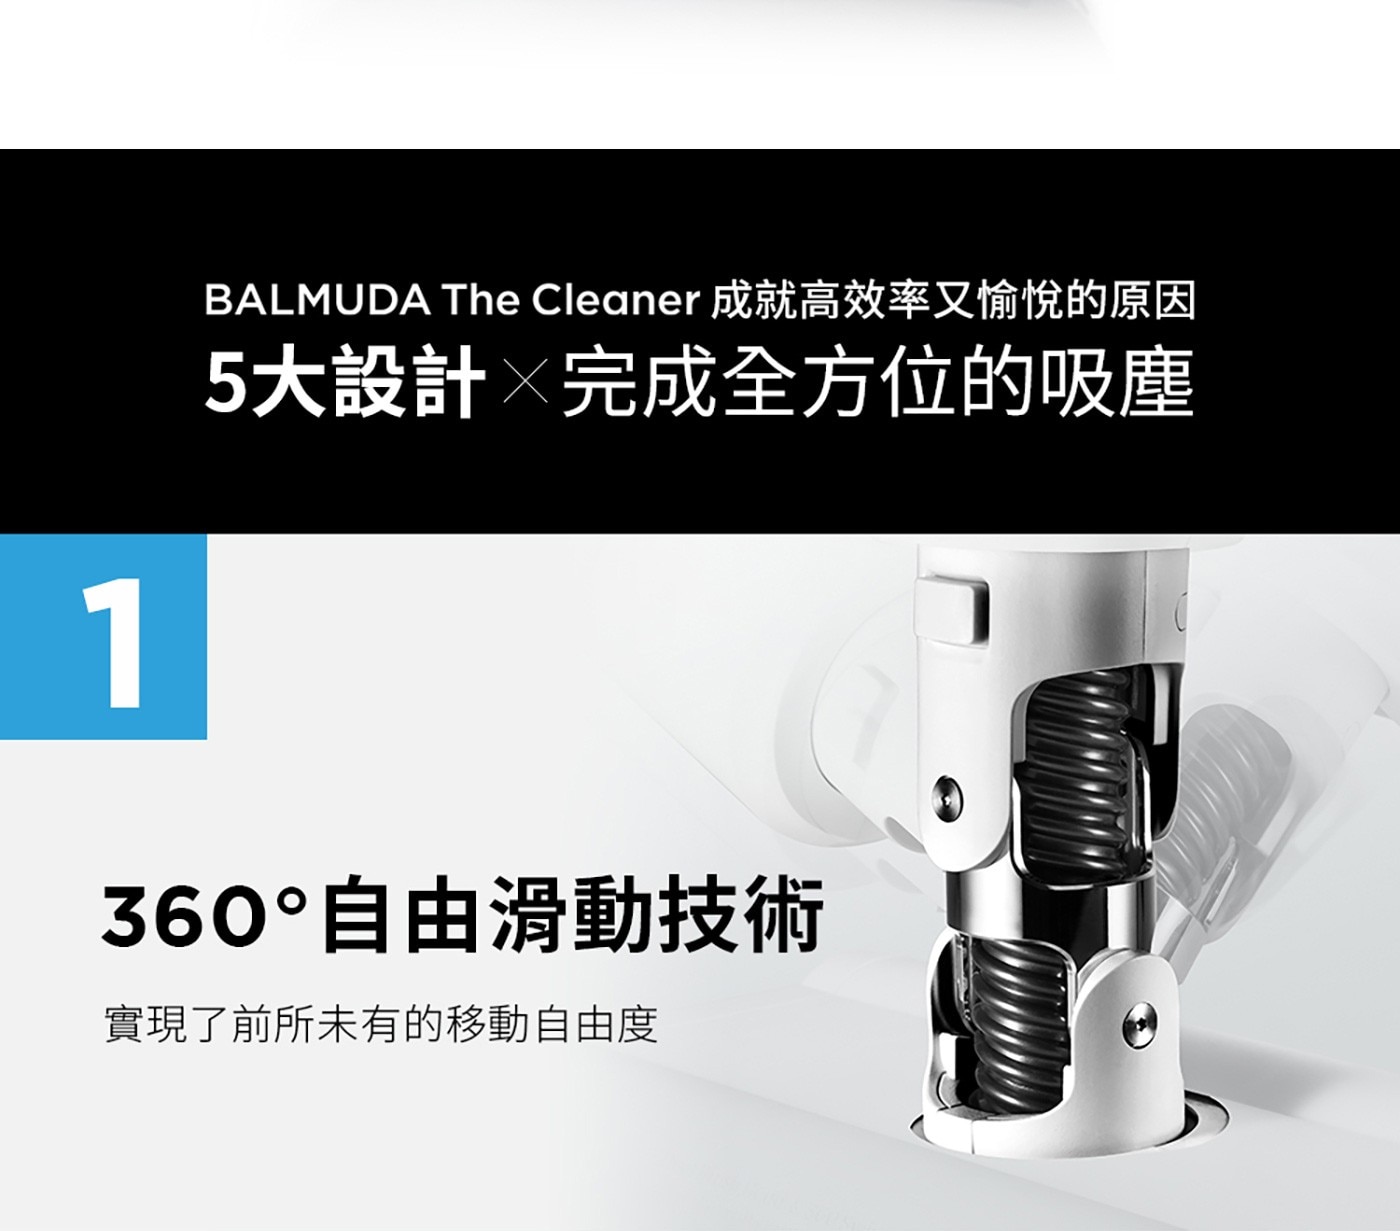 BALMUDA The Cleaner 手提無線吸塵器 C01C雙刷頭懸浮式吸塵器，絕佳手感嶄新的掃除體驗，前後左右移動更加滑順，斜面角落也可自在移動。